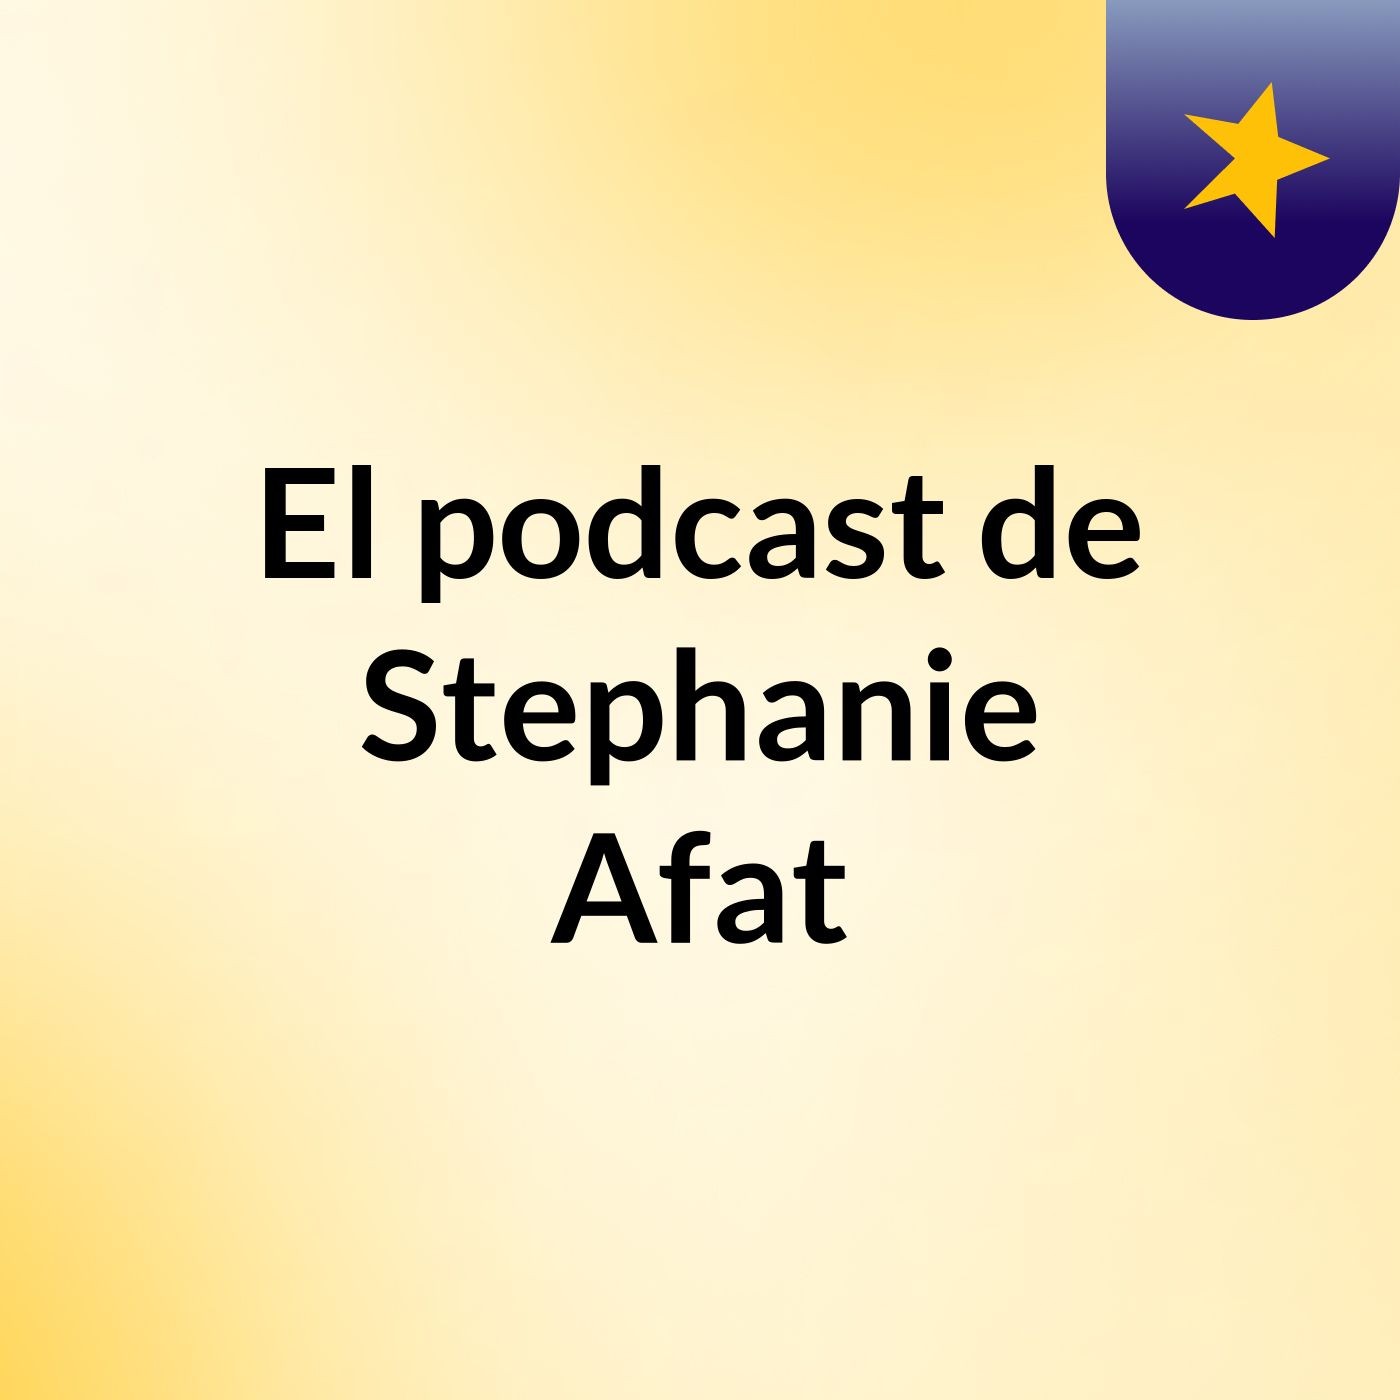 El podcast de Stephanie Afat